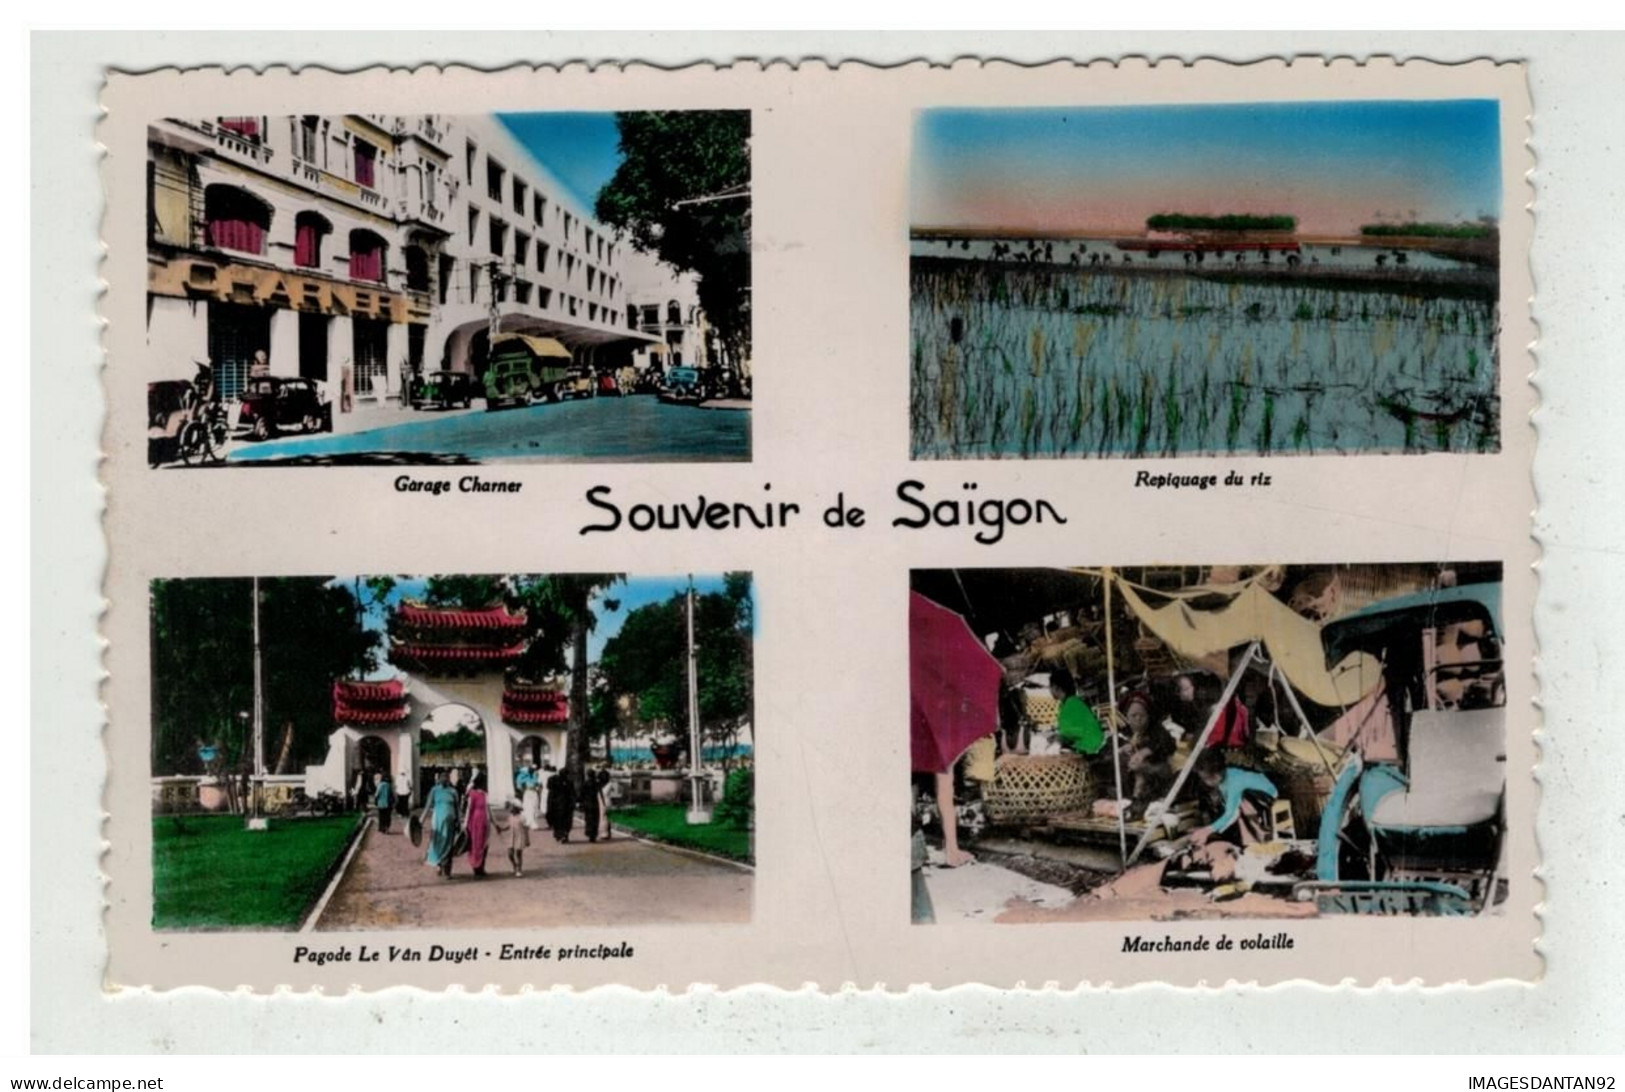 TONKIN INDOCHINE VIETNAM SAIGON #18623 SOUVENIR DE SAIGON GARAGE CHARNER REPIQUAGE RIZ MARCHANDE VOLAILLE - Vietnam